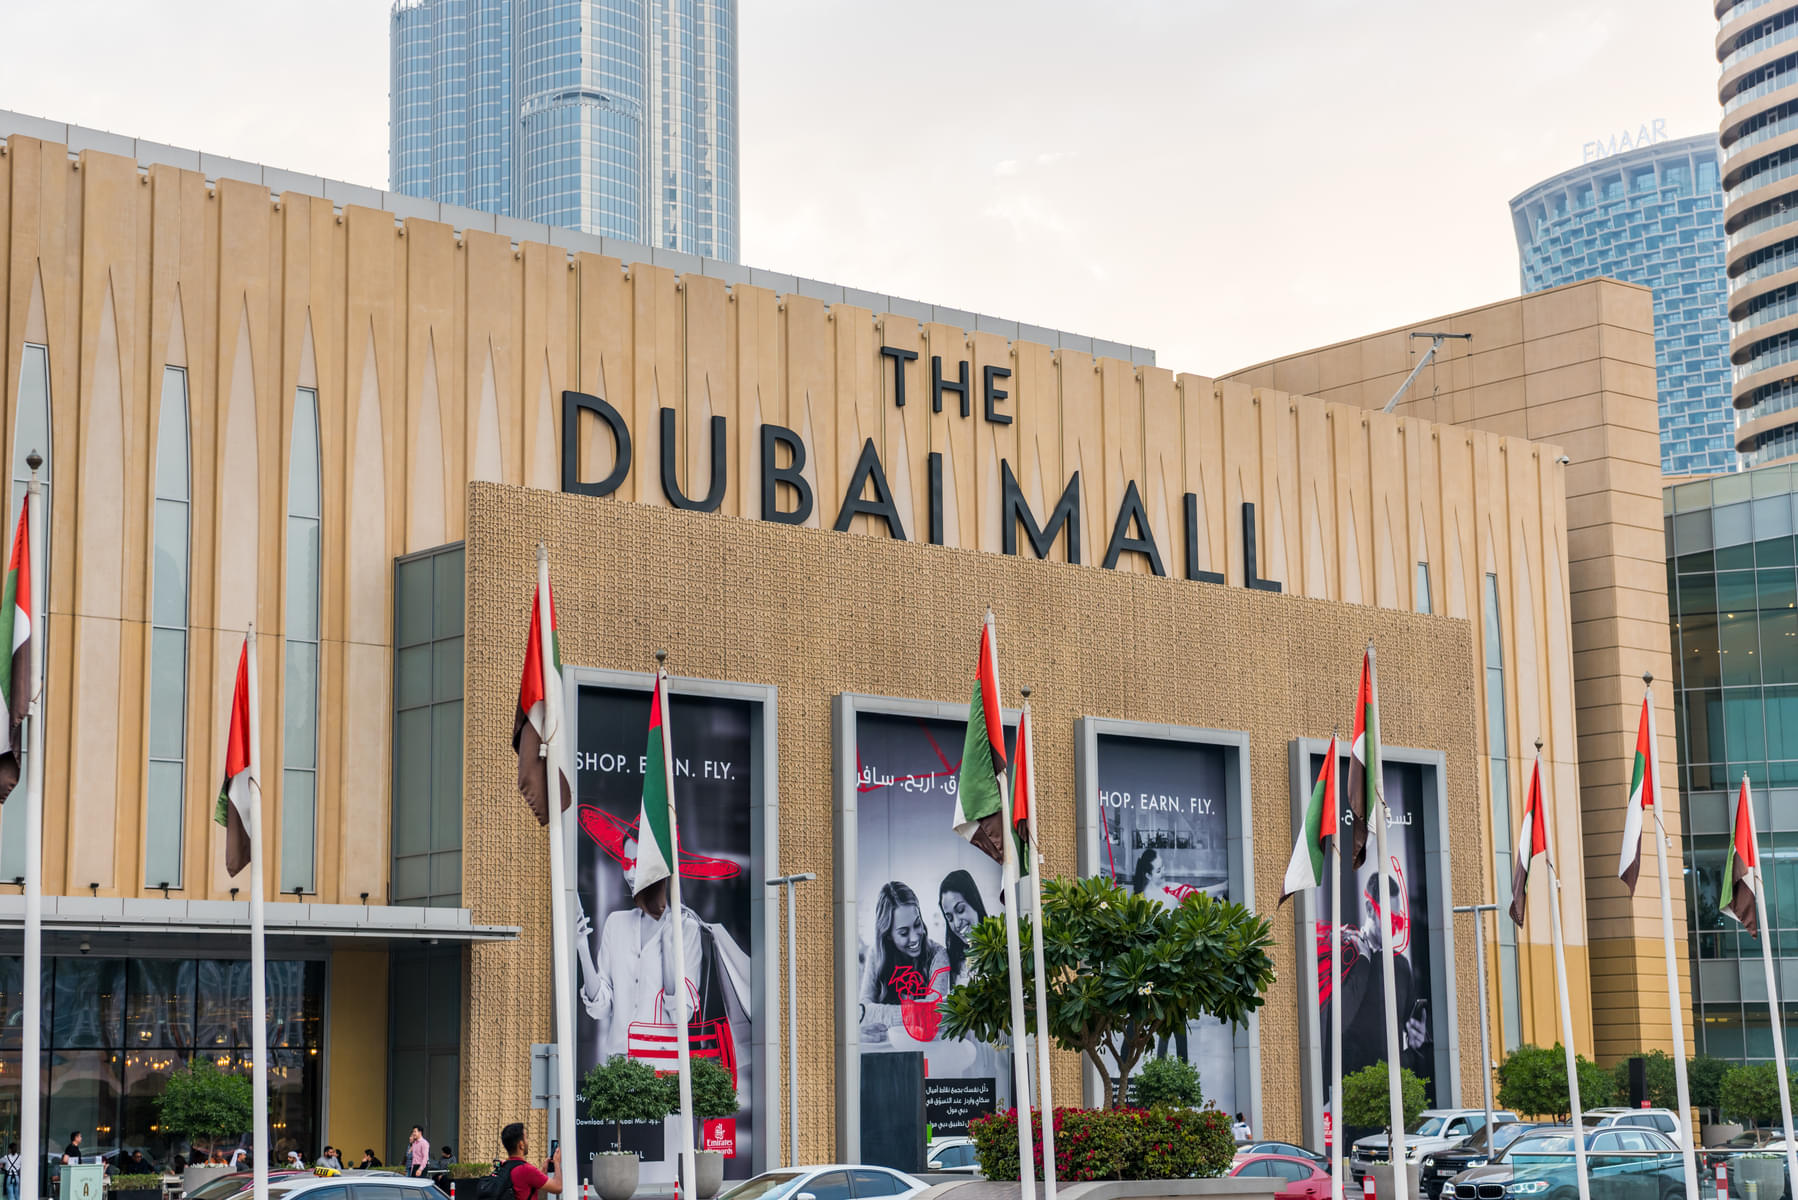 Shop till you drop at the Dubai Mall